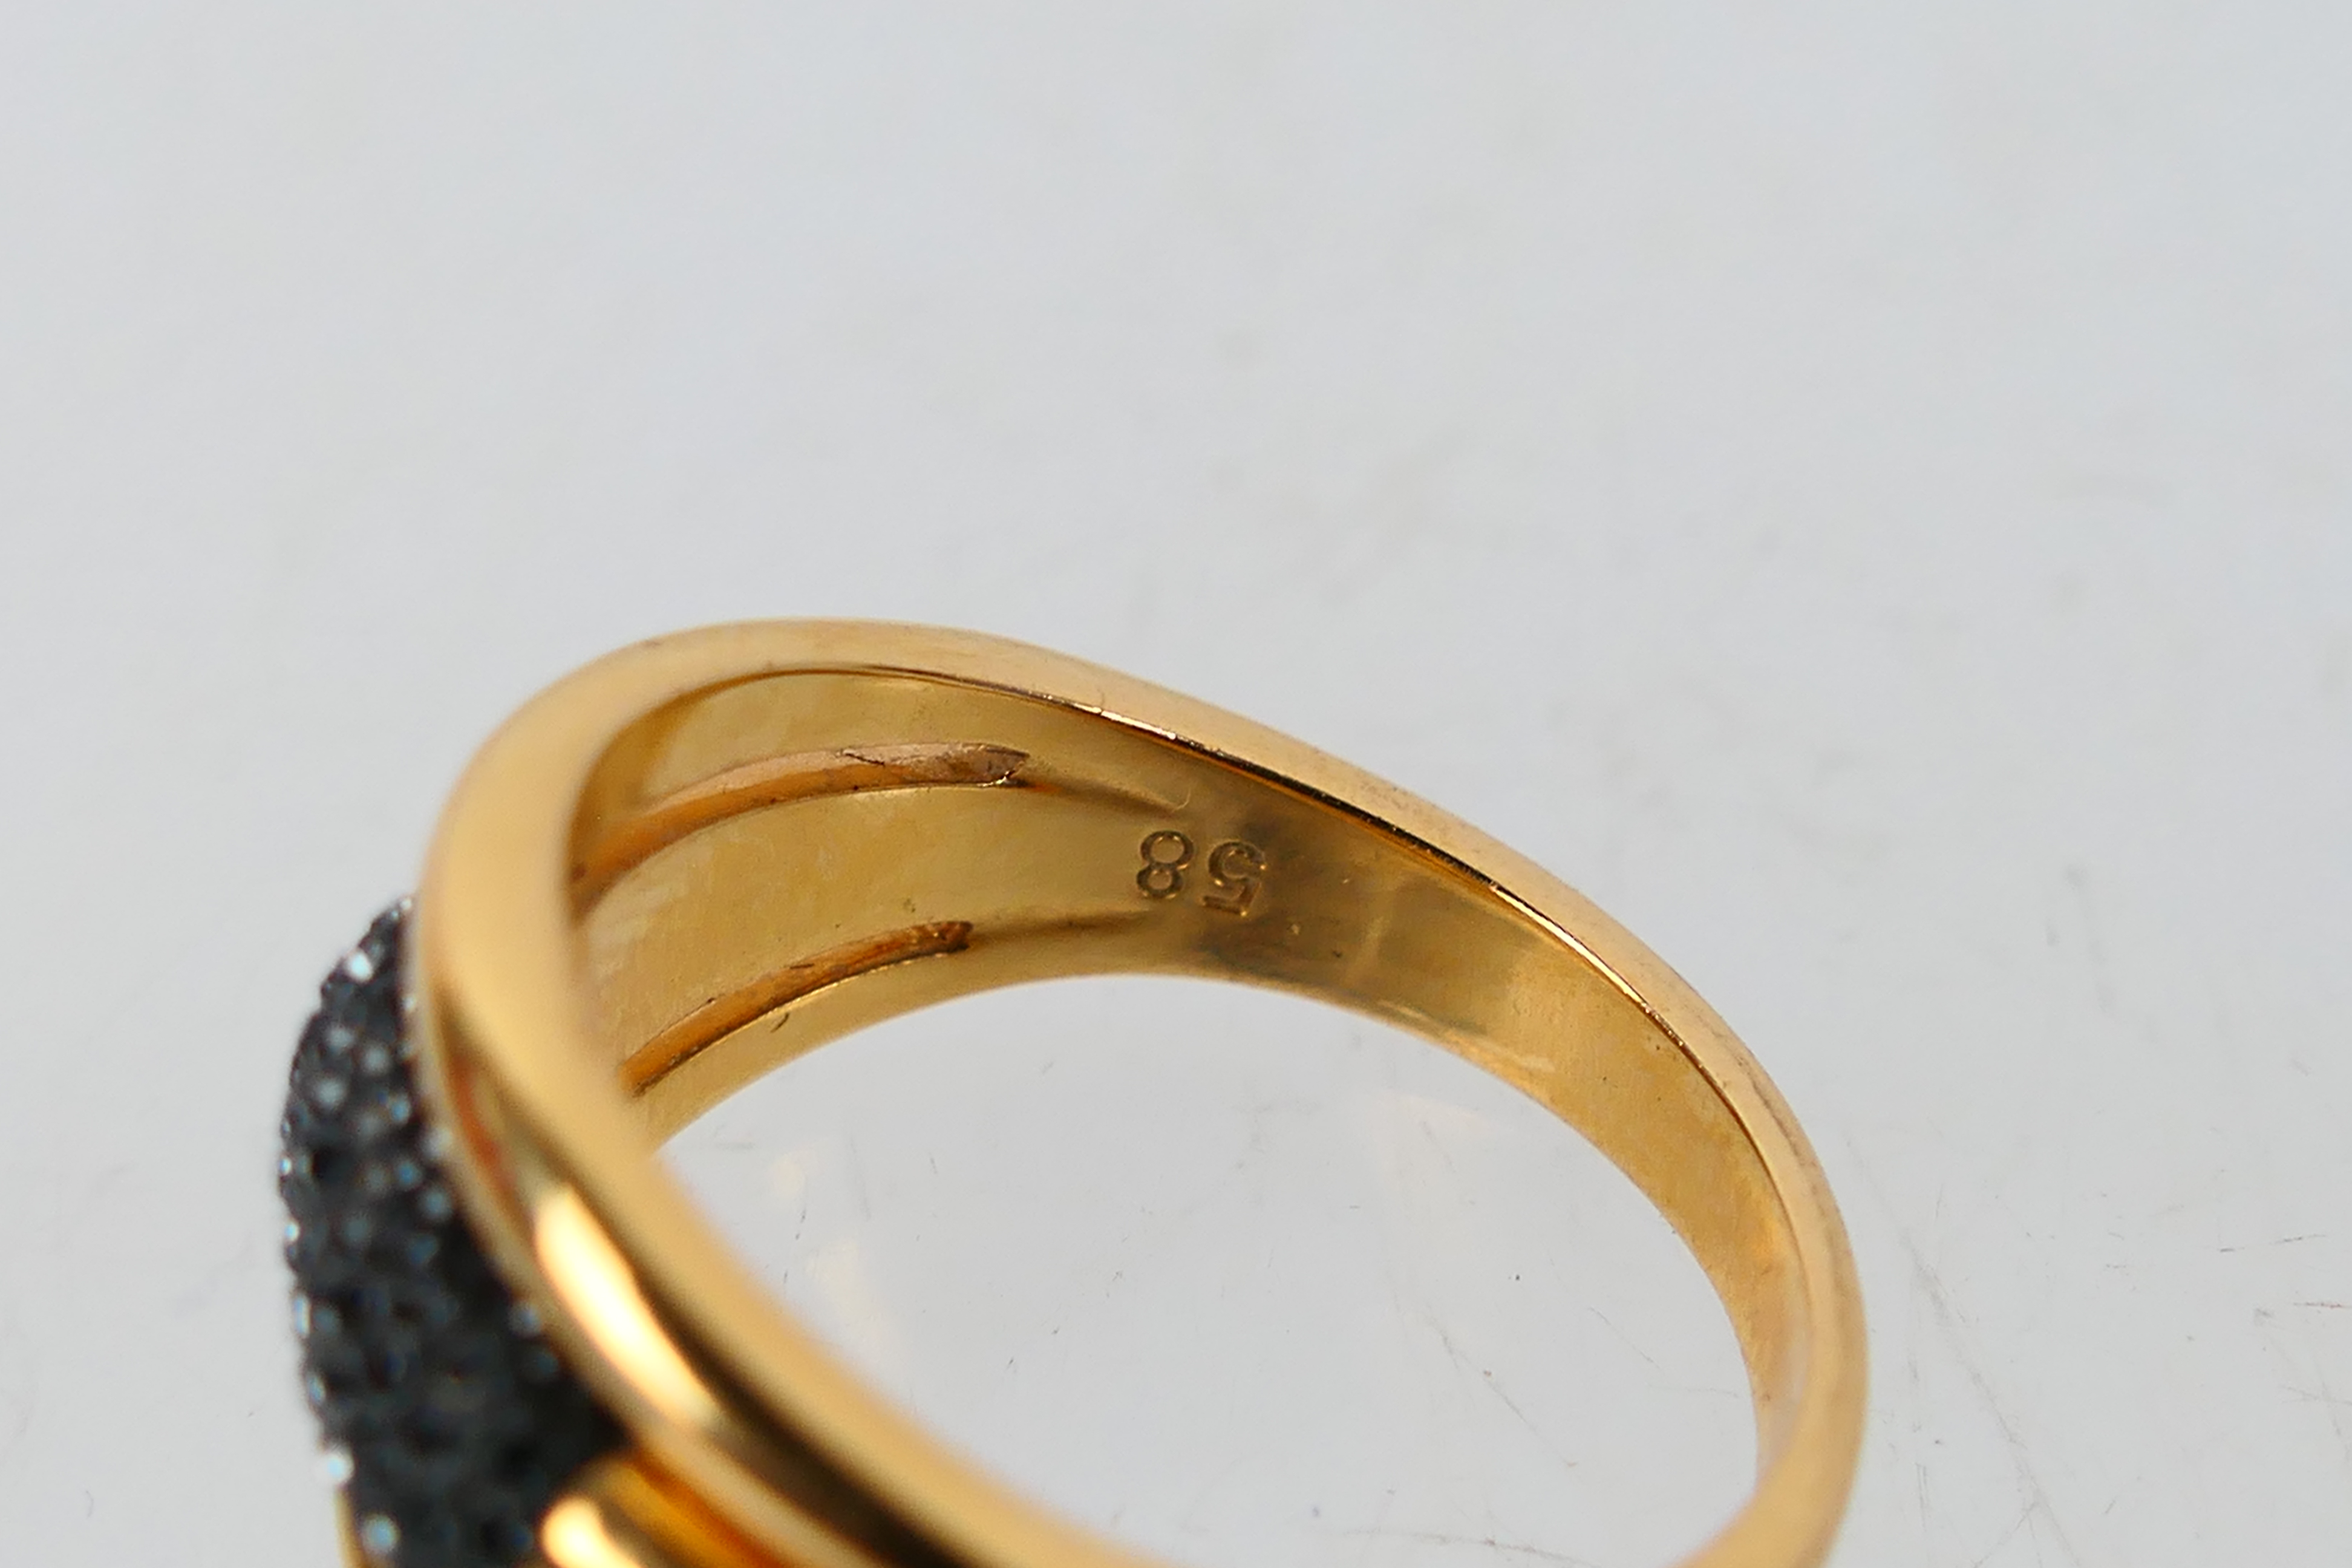 Swarovski - A boxed Swarovski #5124164 Cypress black rose gold plated ring. - Image 4 of 7